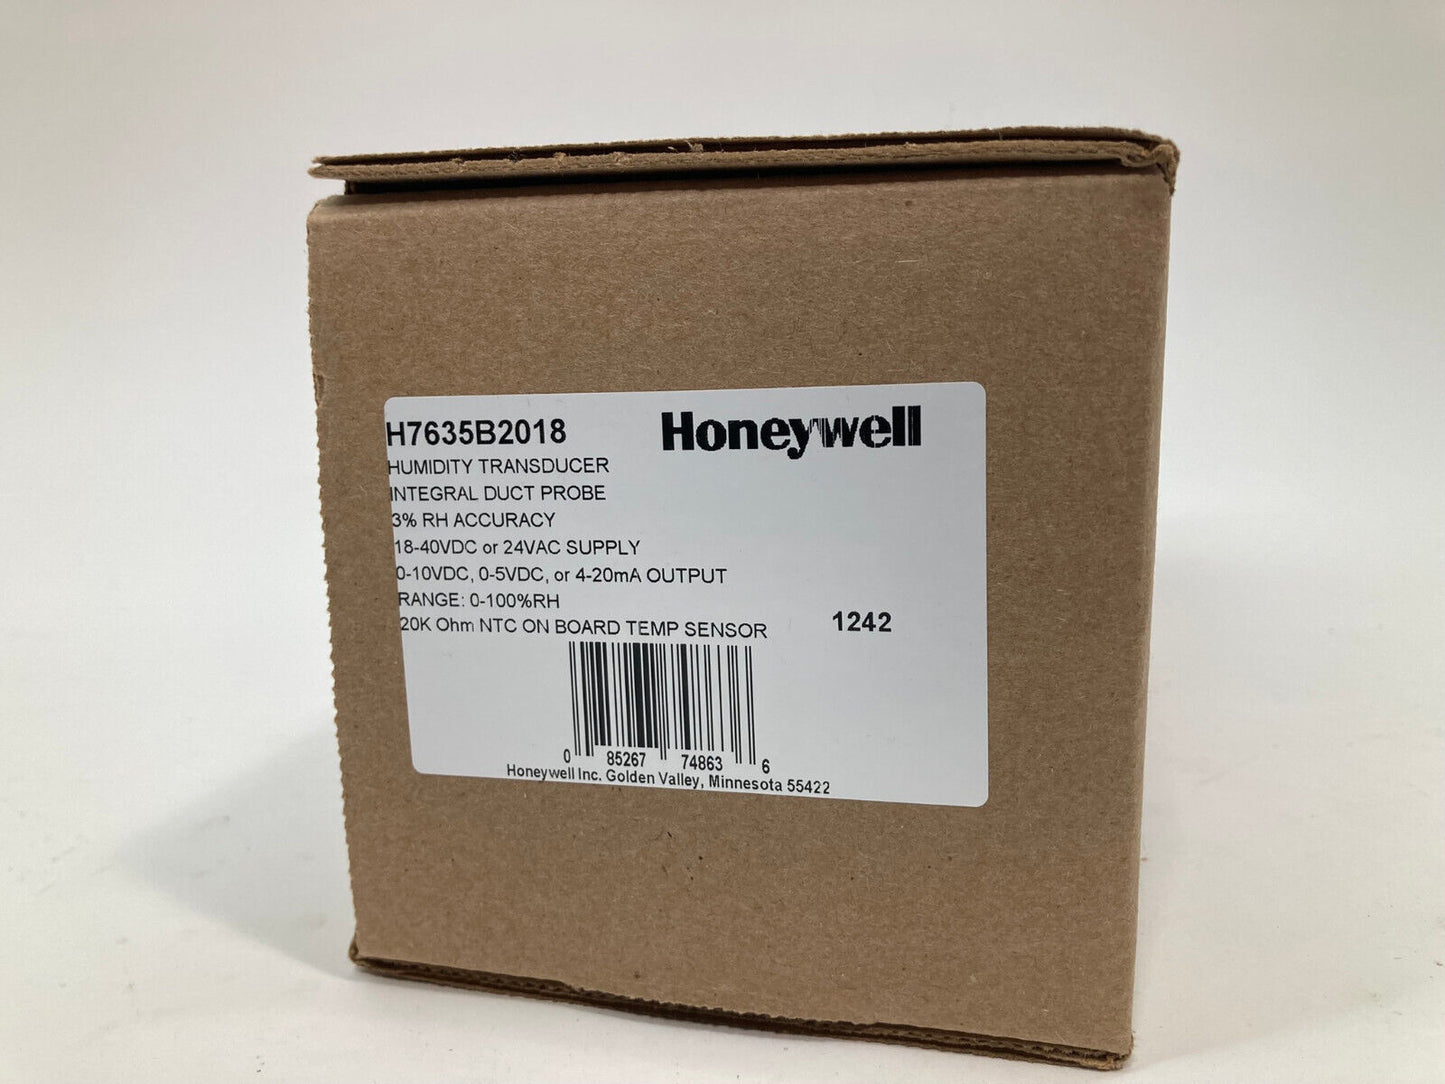 New HONEYWELL H7635B2018 Humidity Transducer Integral Duct Probe